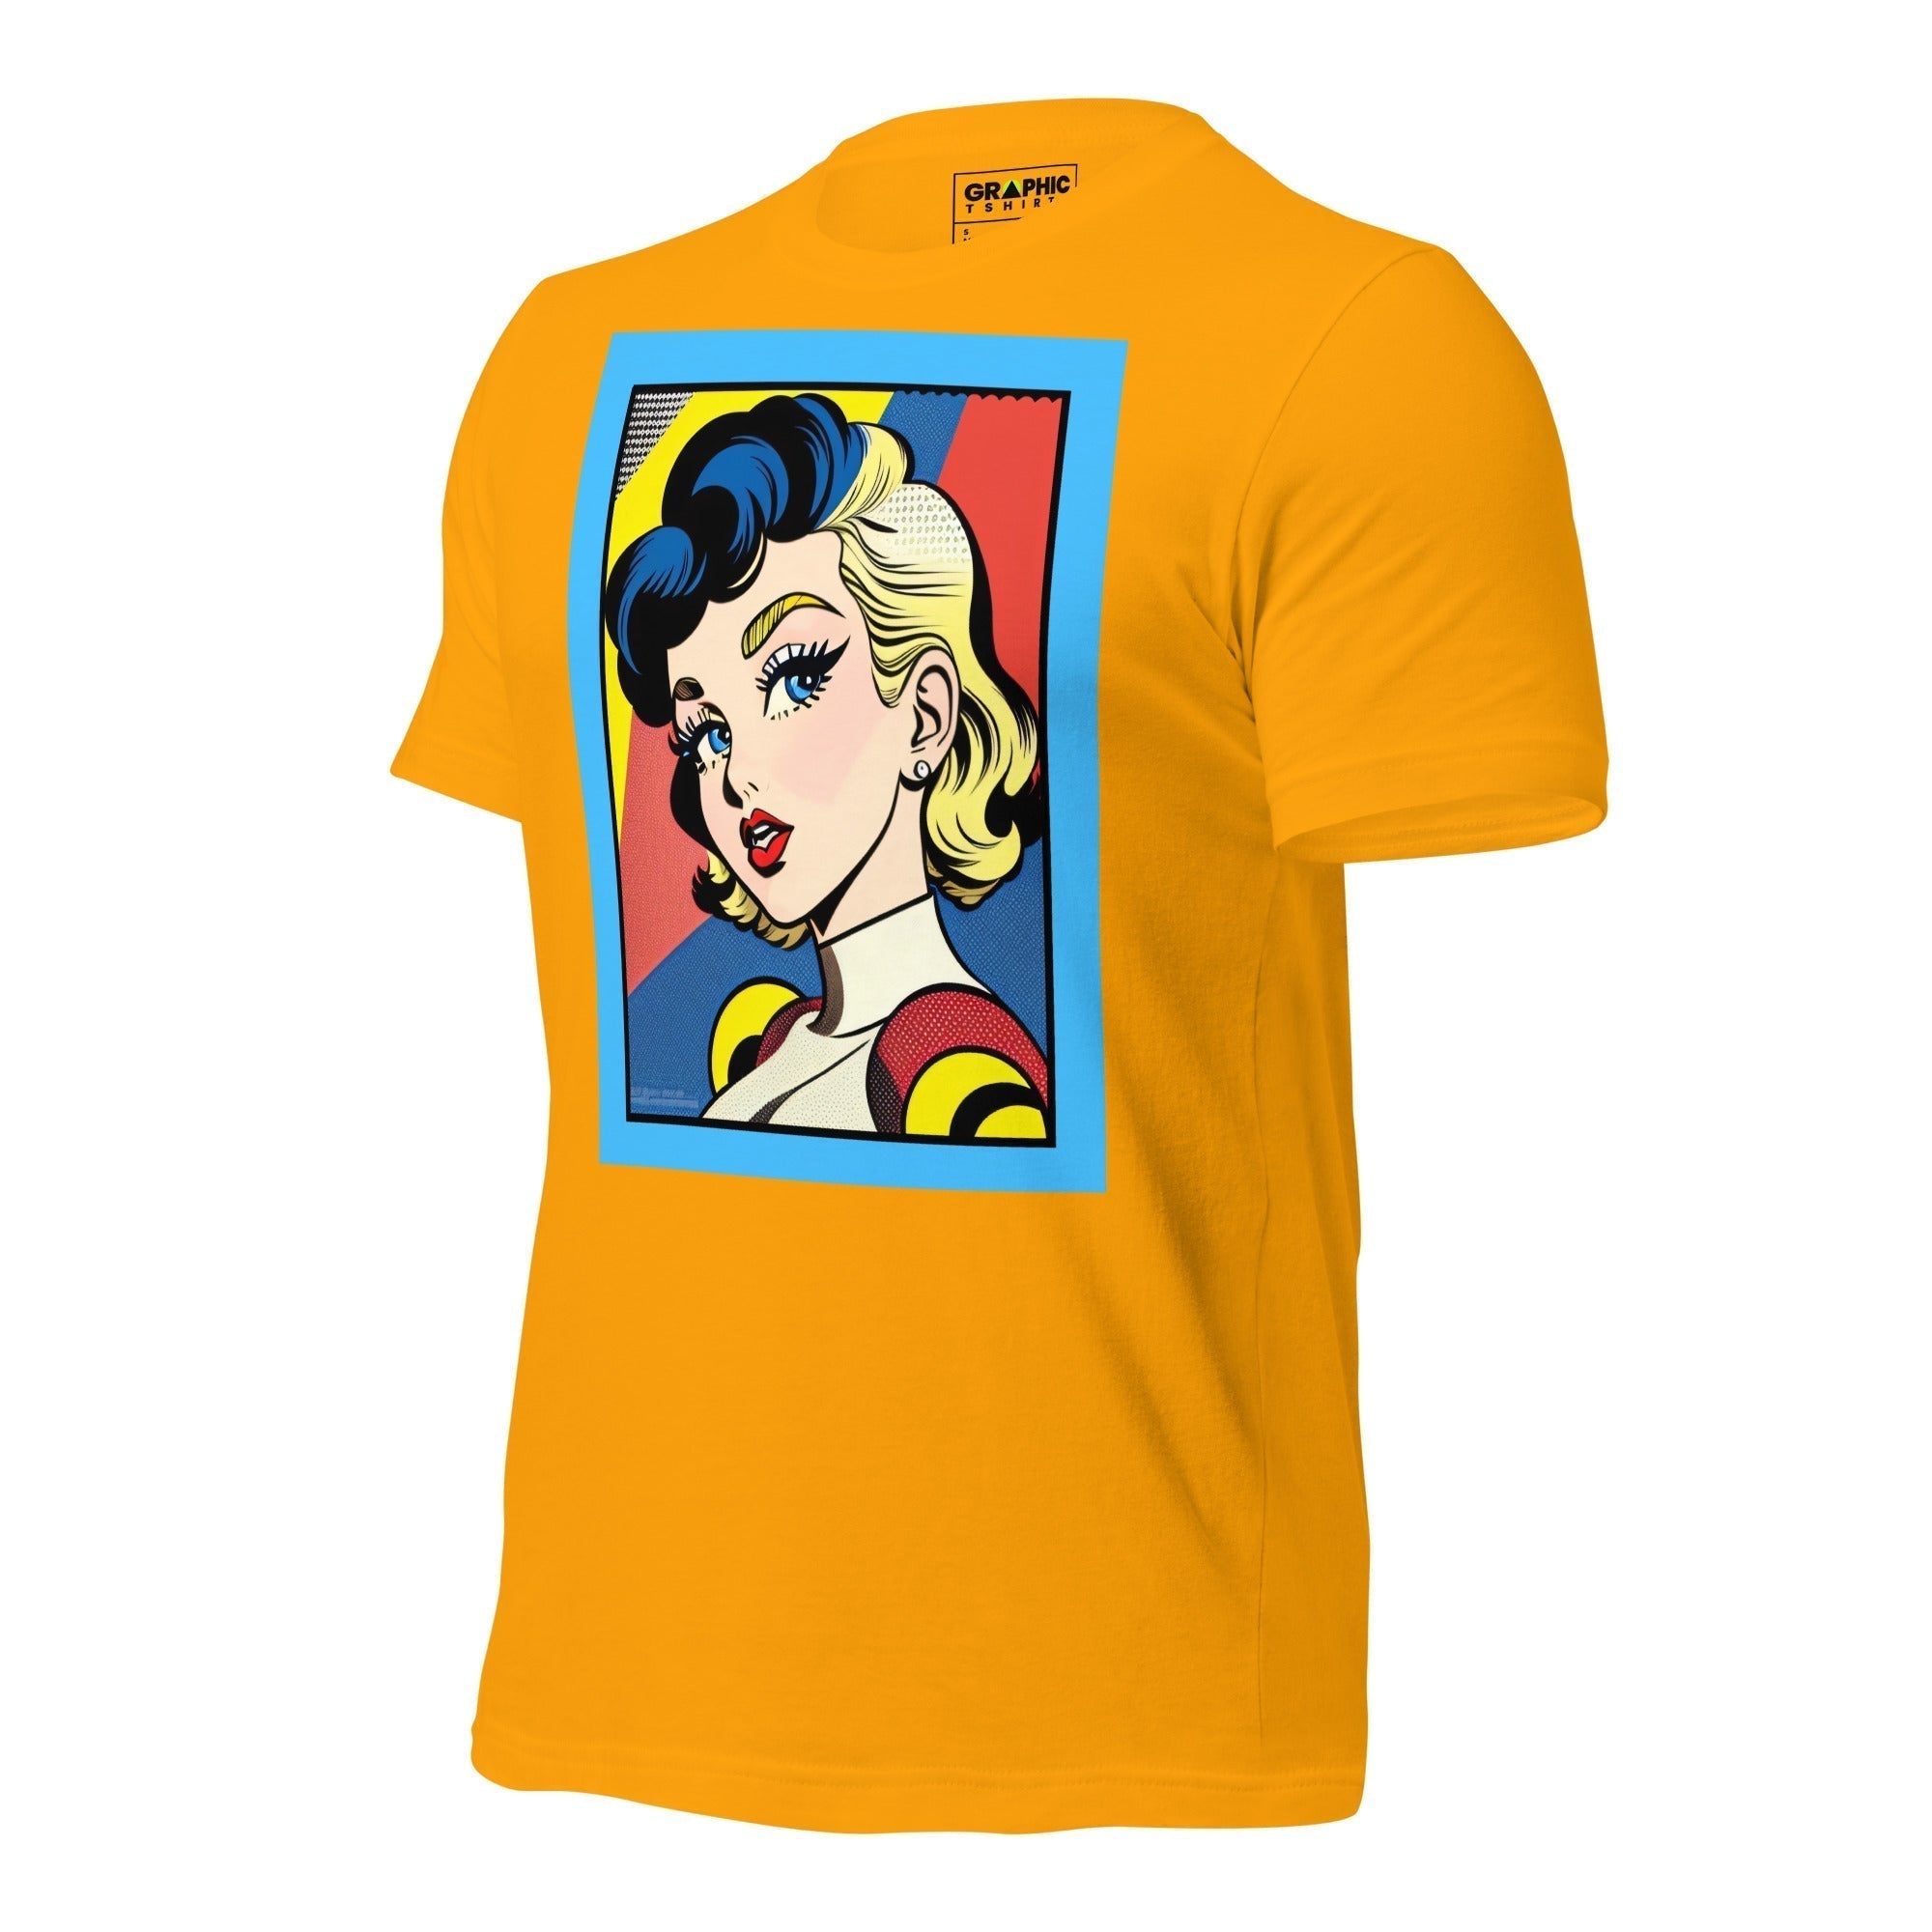 Unisex Crew Neck T-Shirt - Vintage American Comic Series v.36 - GRAPHIC T-SHIRTS